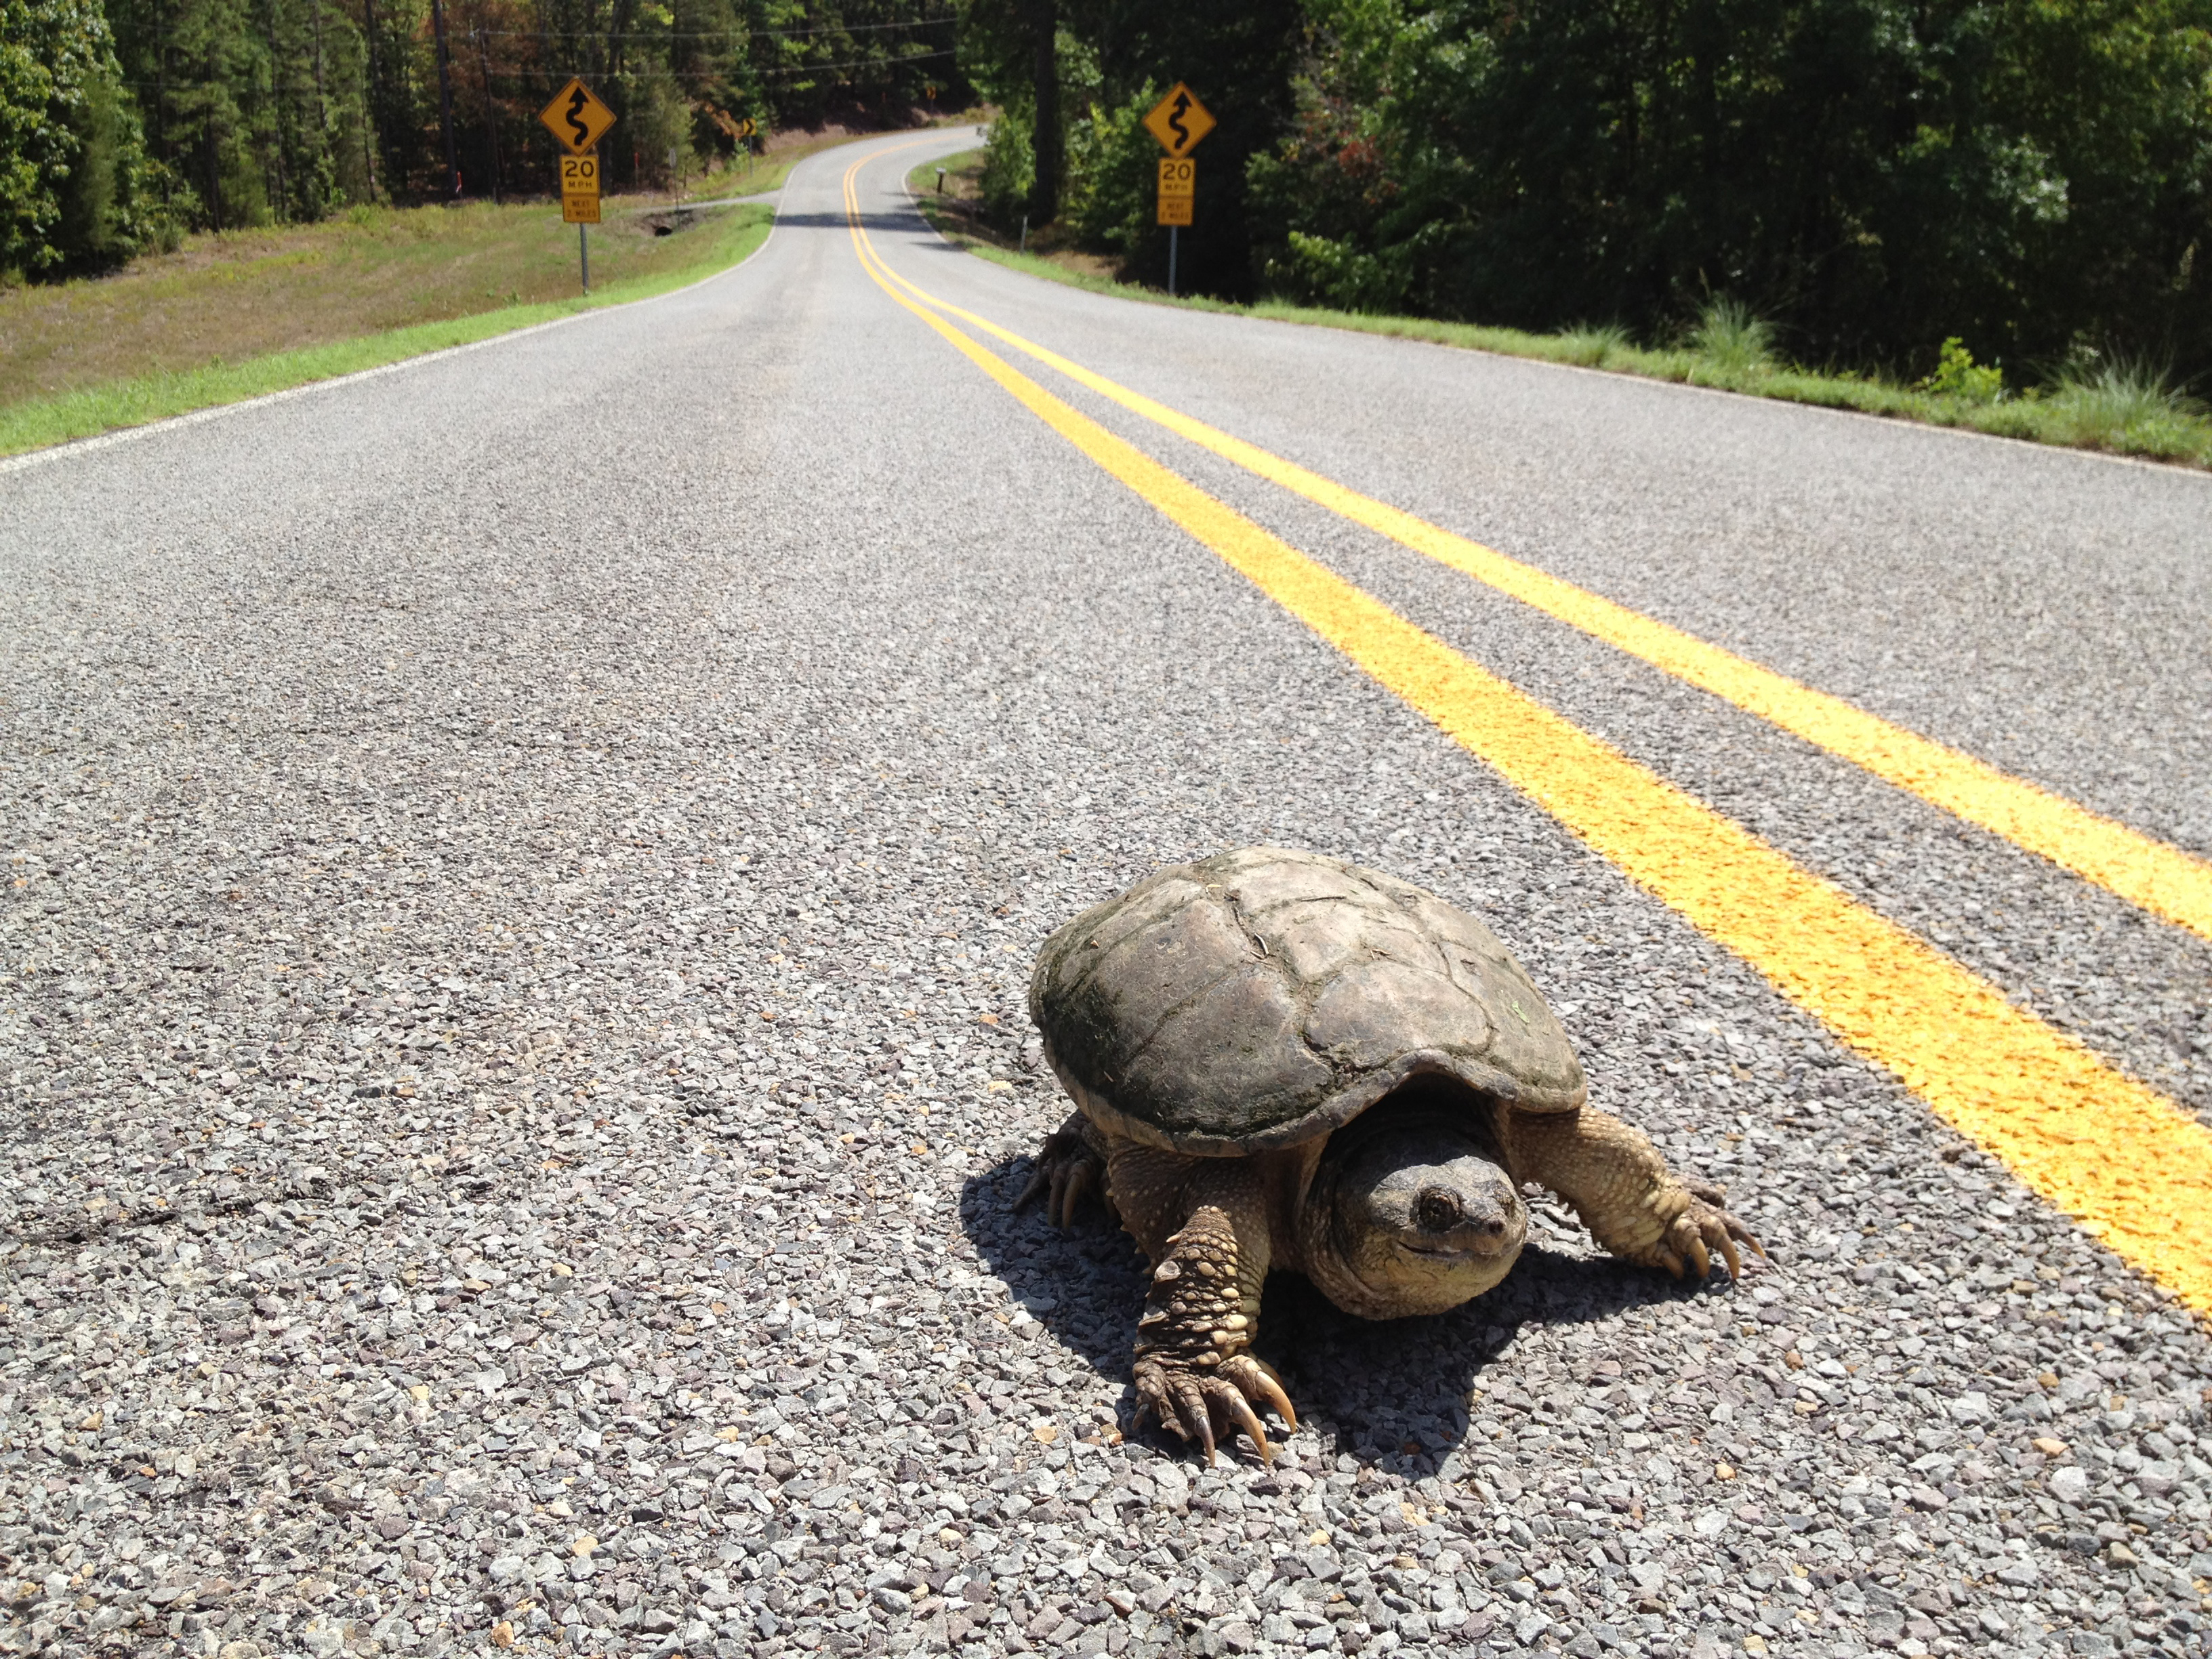 Ползут 3 черепахи. Черепаха на дороге. Черепаха ползет. Медленная черепаха. Черепаха в движении.